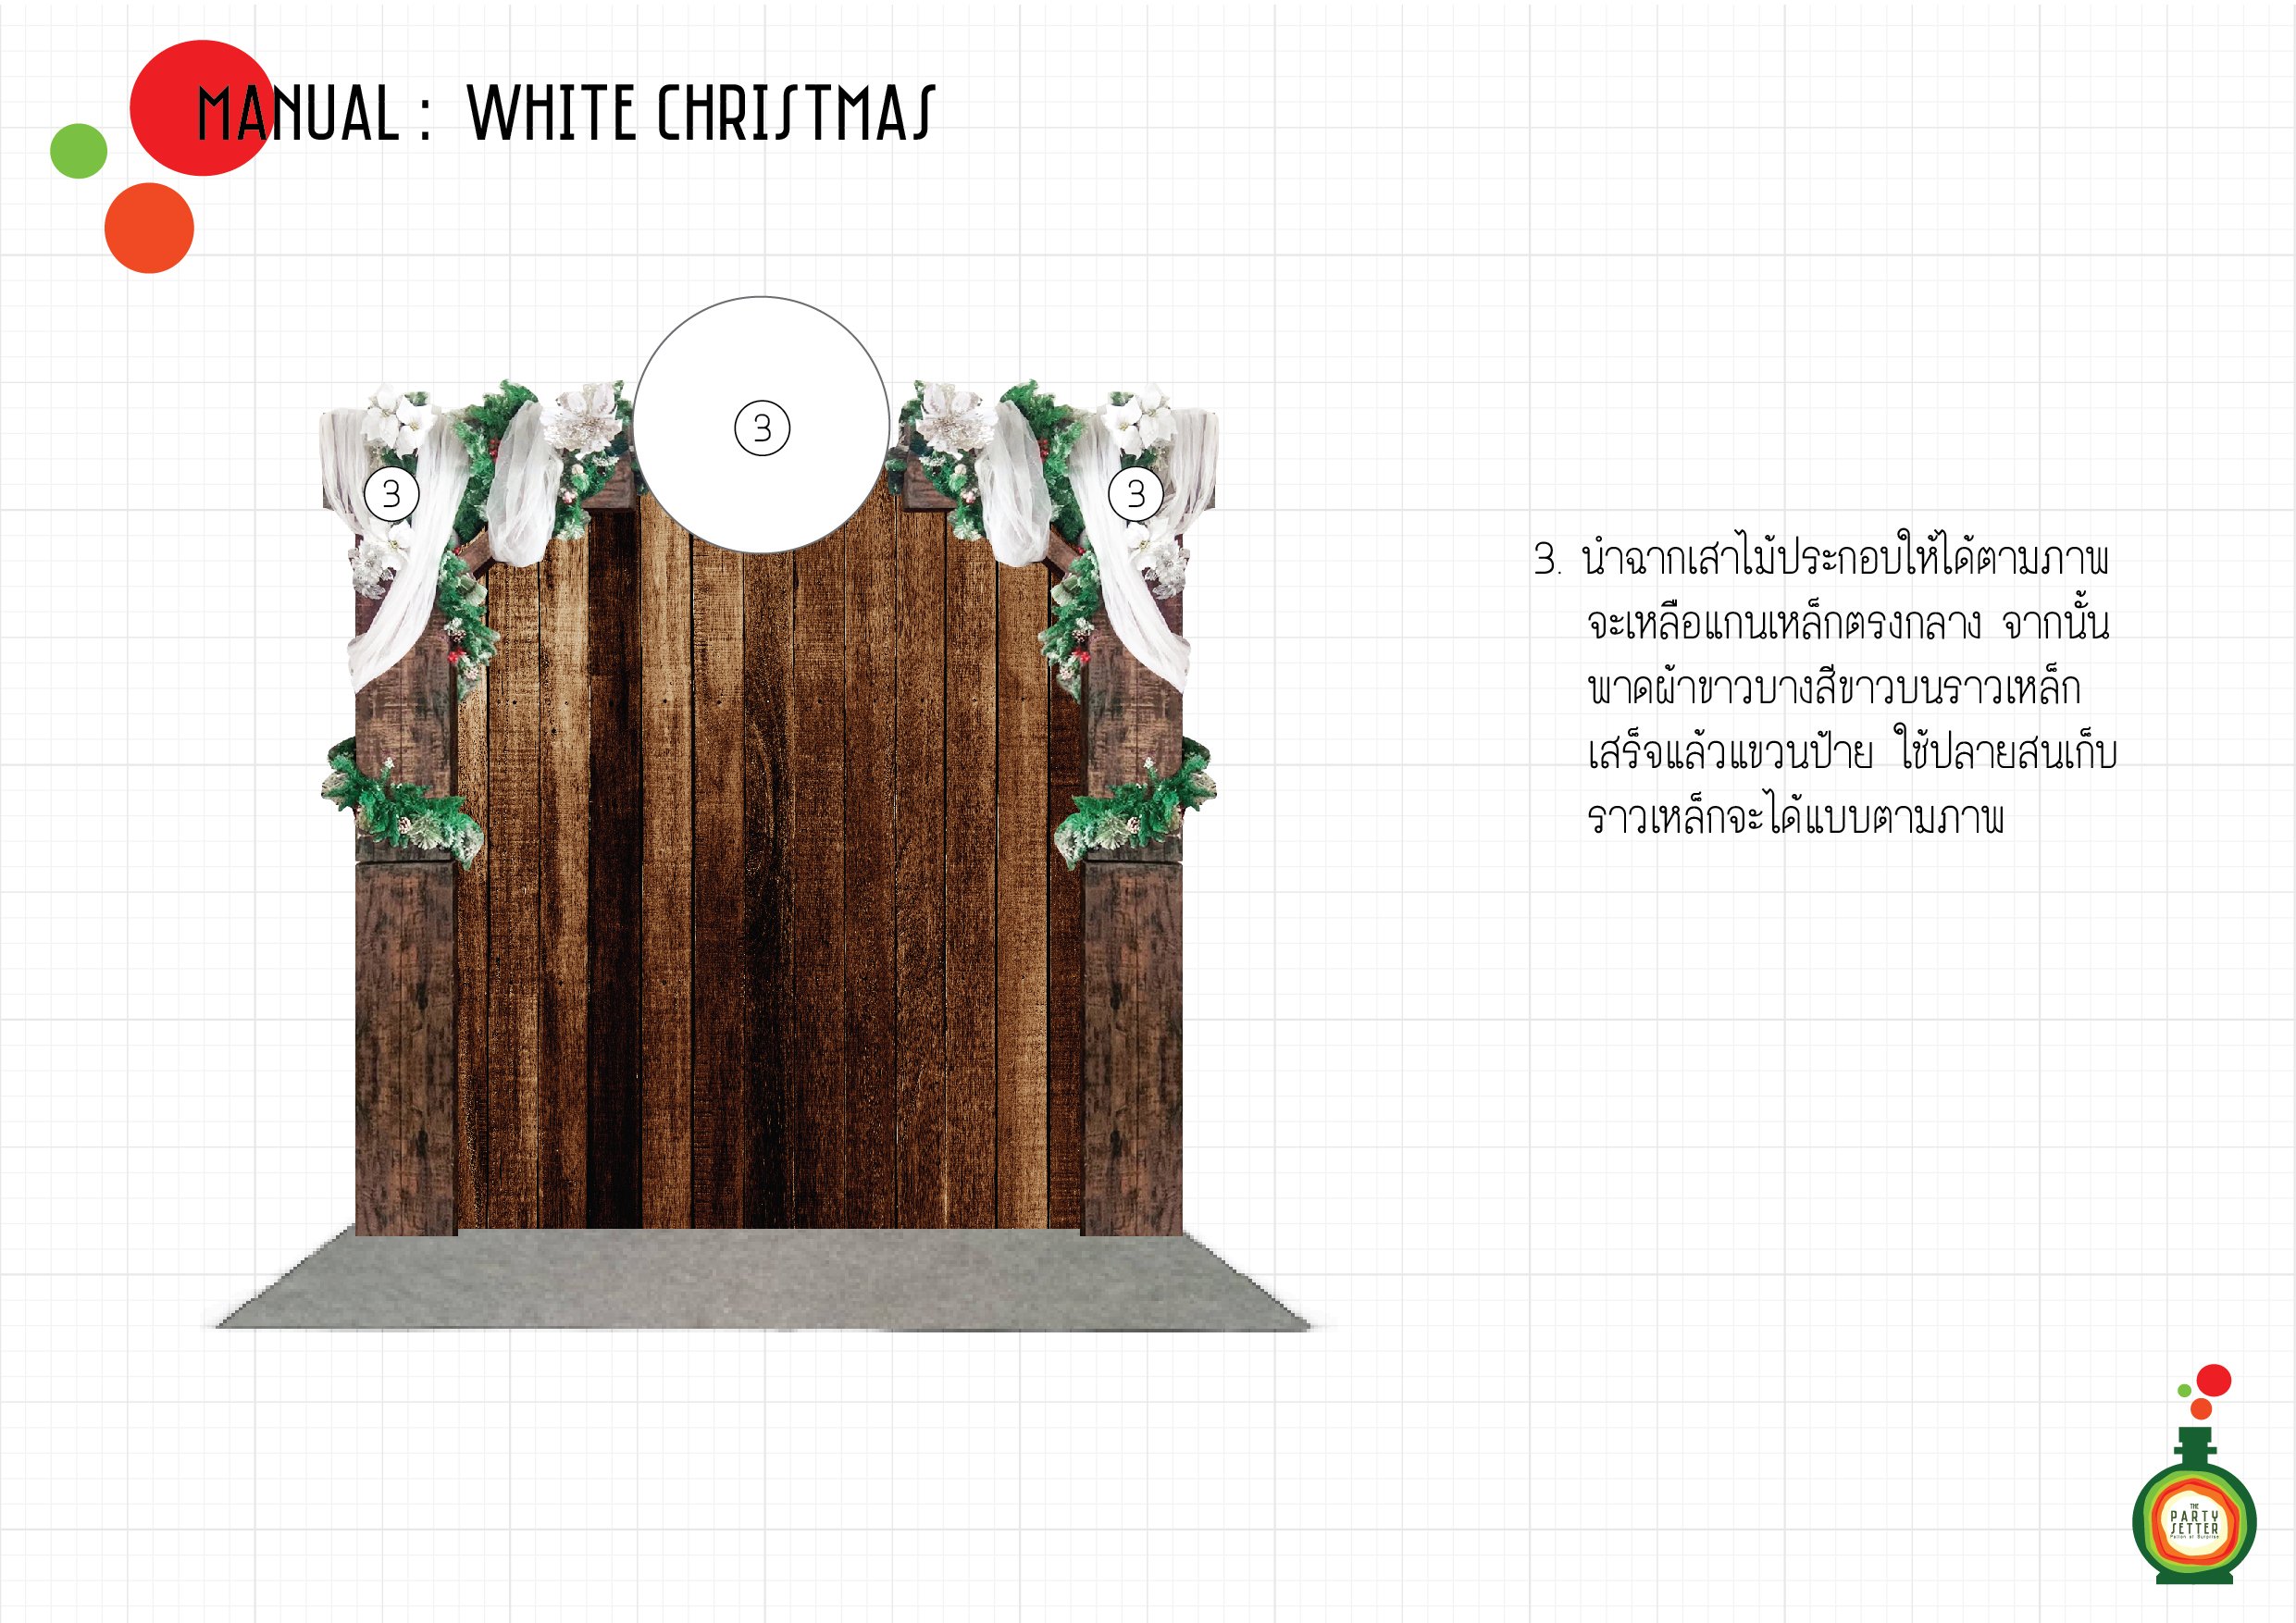 Manual_White Christmas-03-01.jpg